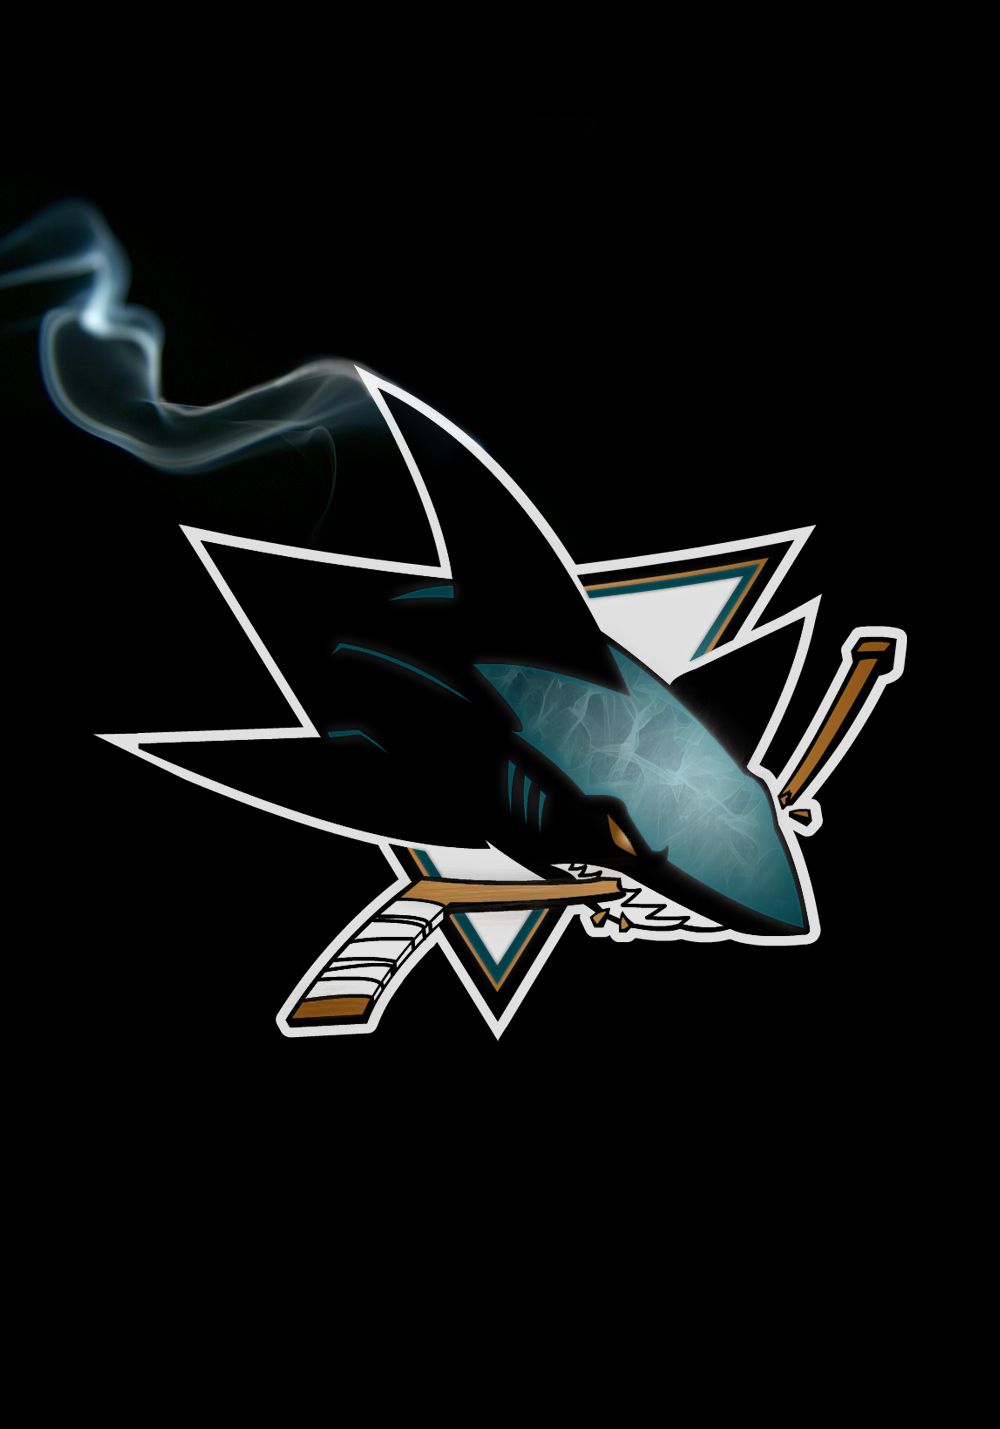 San Jose Sharks logoNHL editorial stock image Illustration of gate   142860609